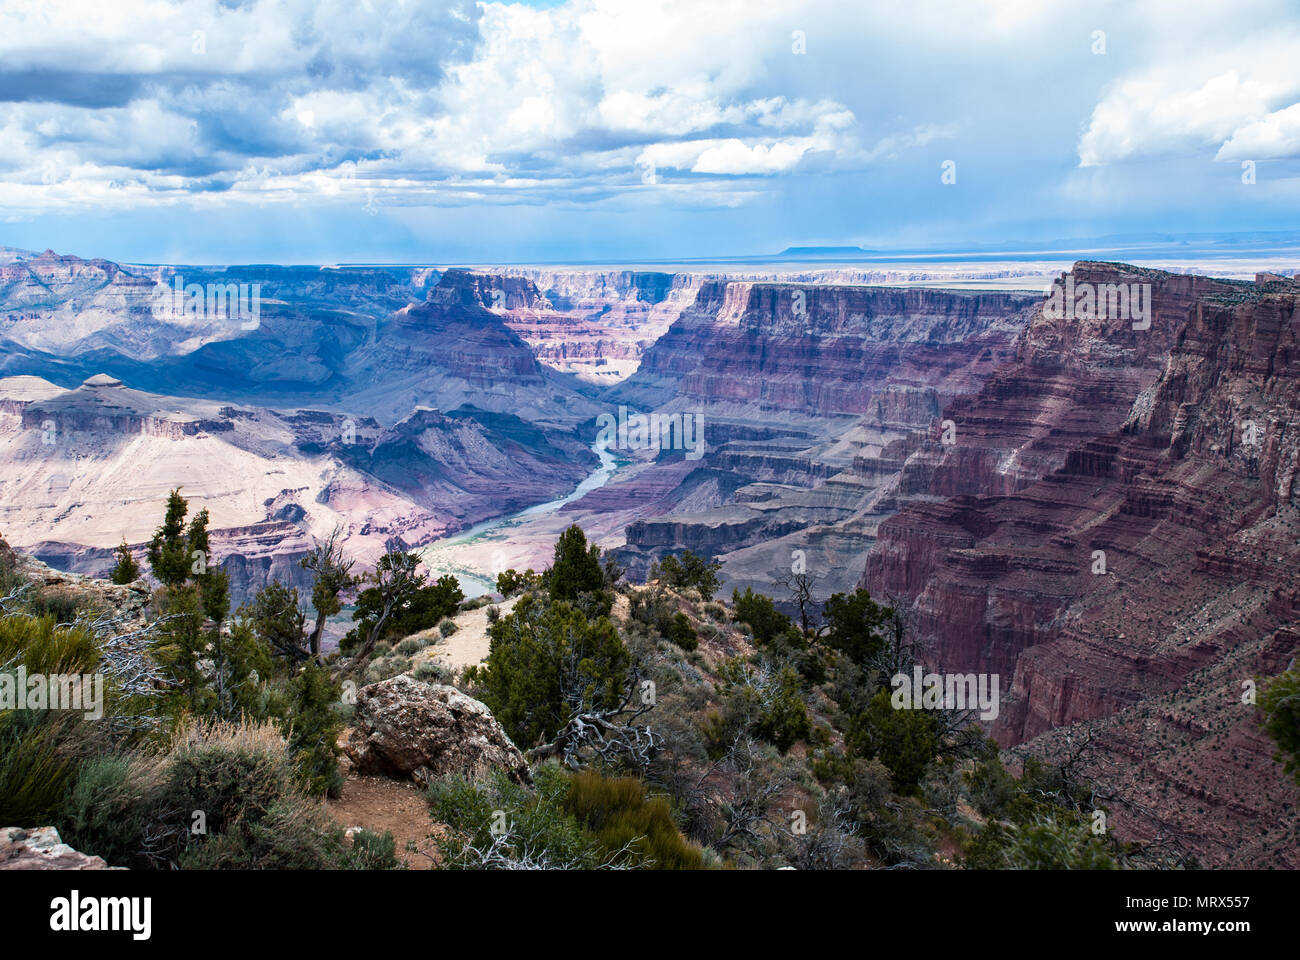 Grand Canyon, South Rim, Colorado River View, Arizona, National Park, USA, Red Rock Formations, Desert Plants Stock Photo